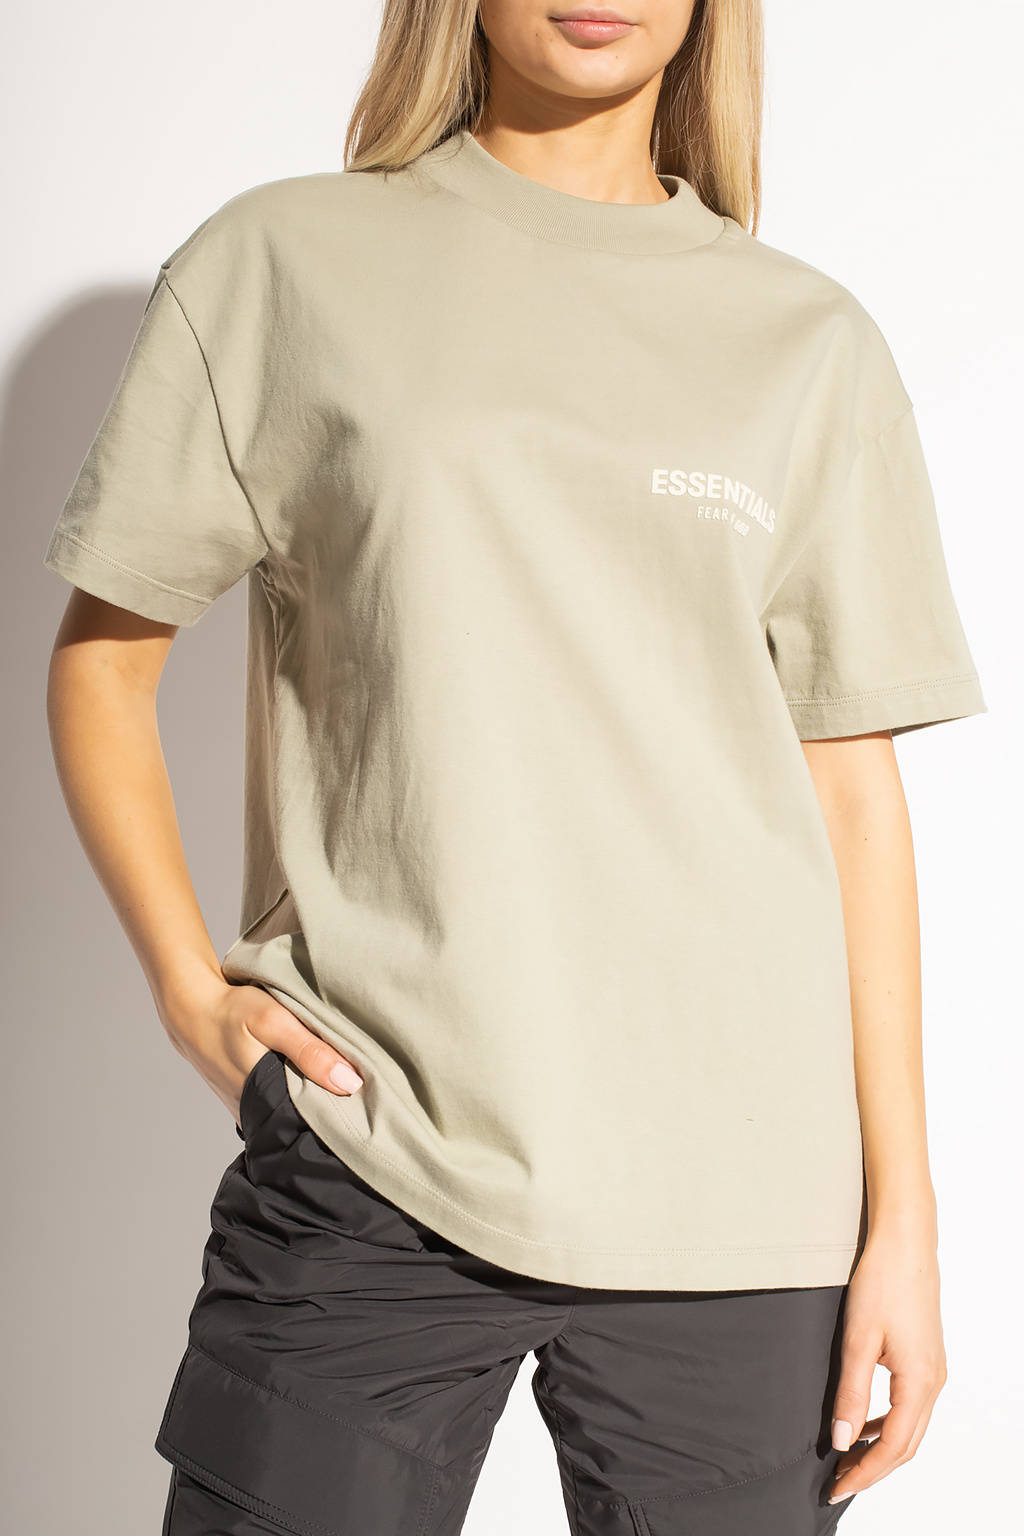 T - shirt with logo Fear Of God Essentials - IetpShops KR 